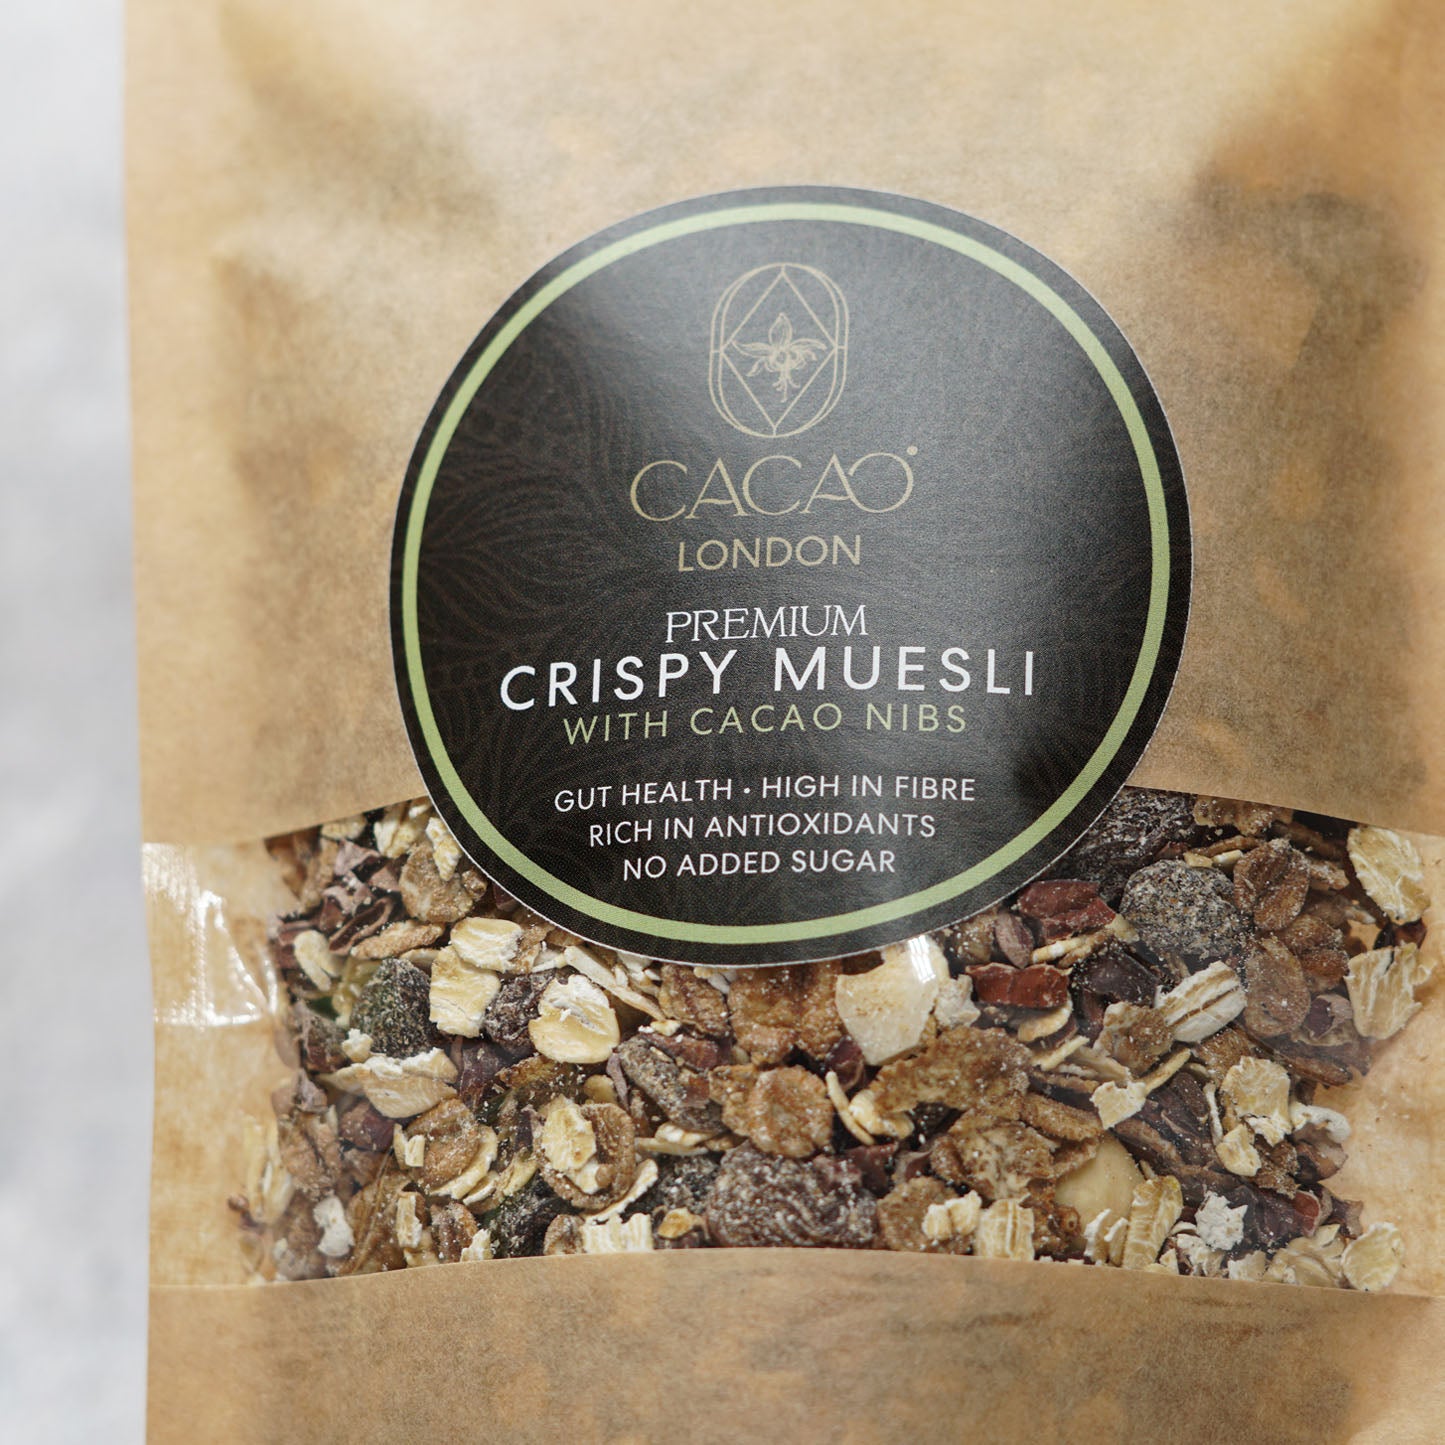 Crispy Muesli with Cacao Nibs